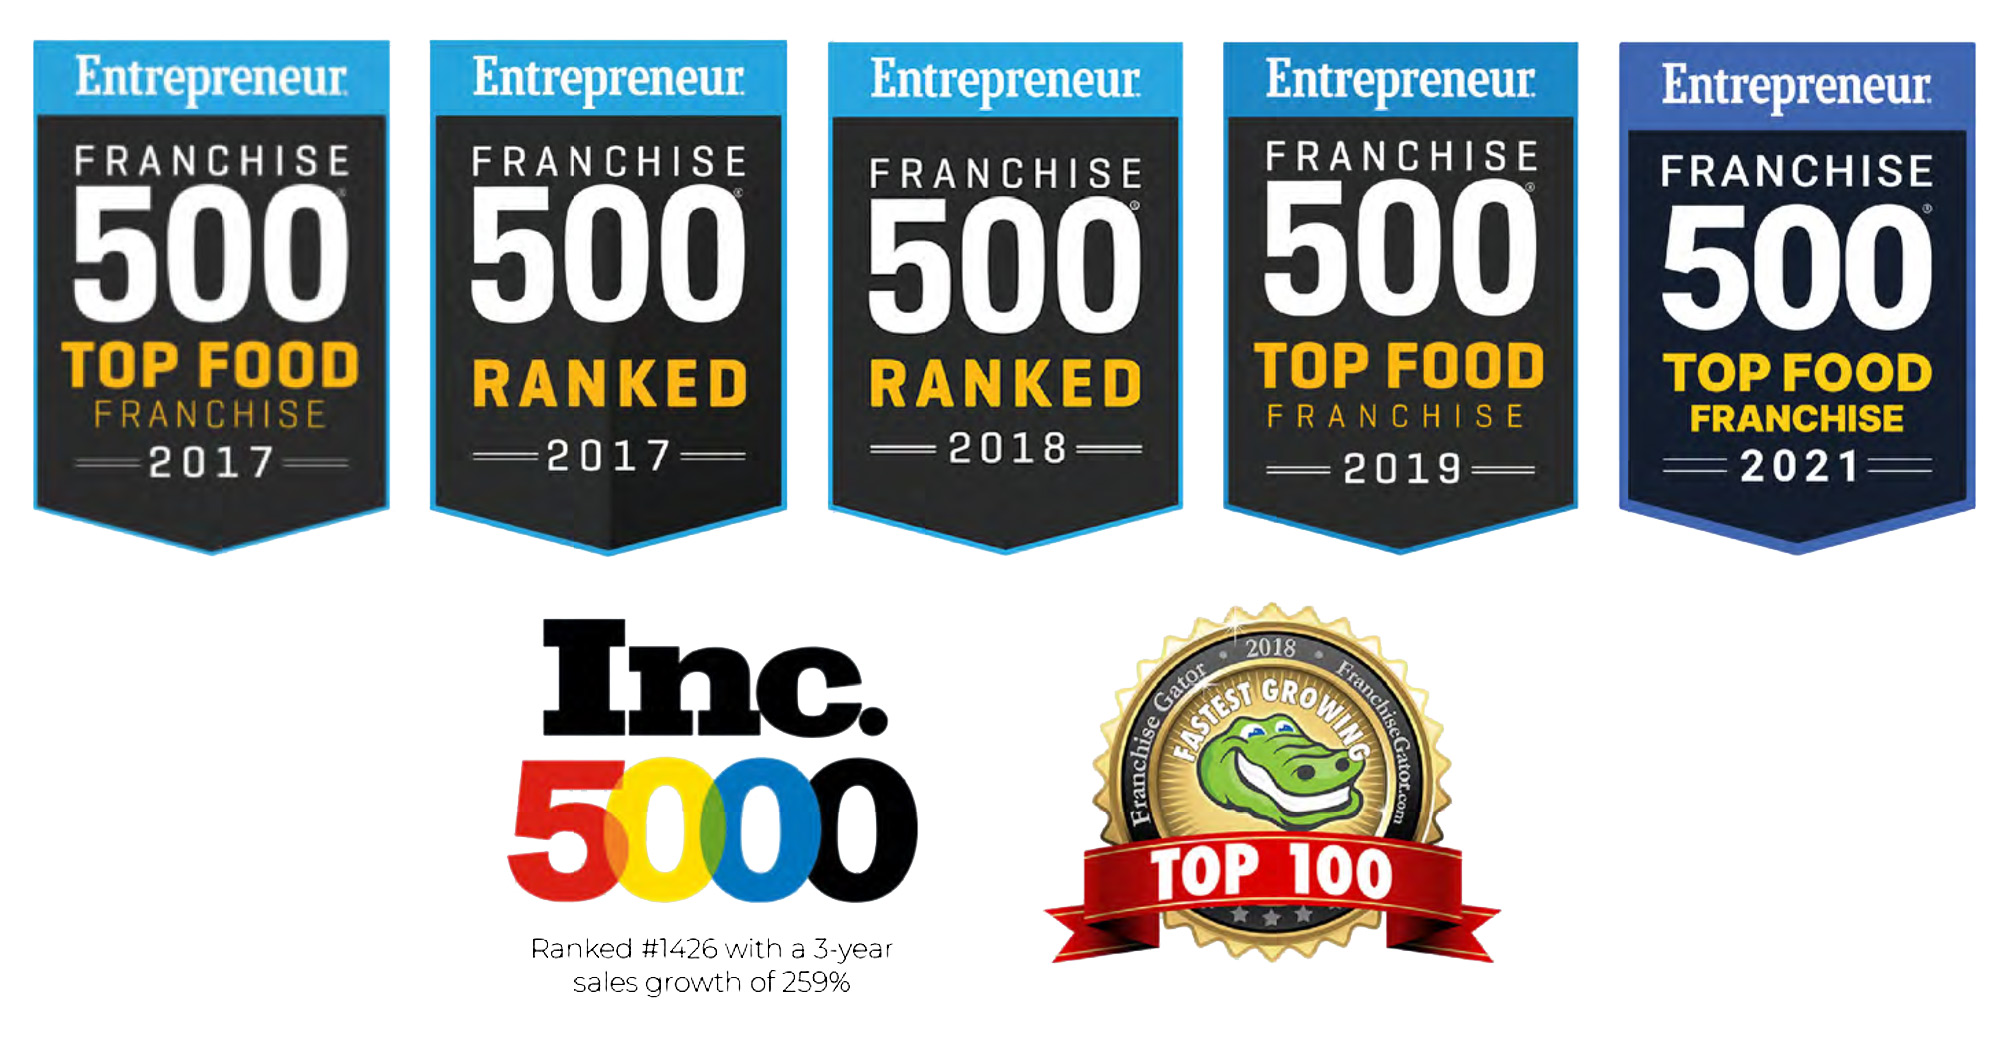 Entrepreneur Franchise 500 Awards, Inc. 5000 Ranking, and Franchise Gator Fastest Growing Top 100